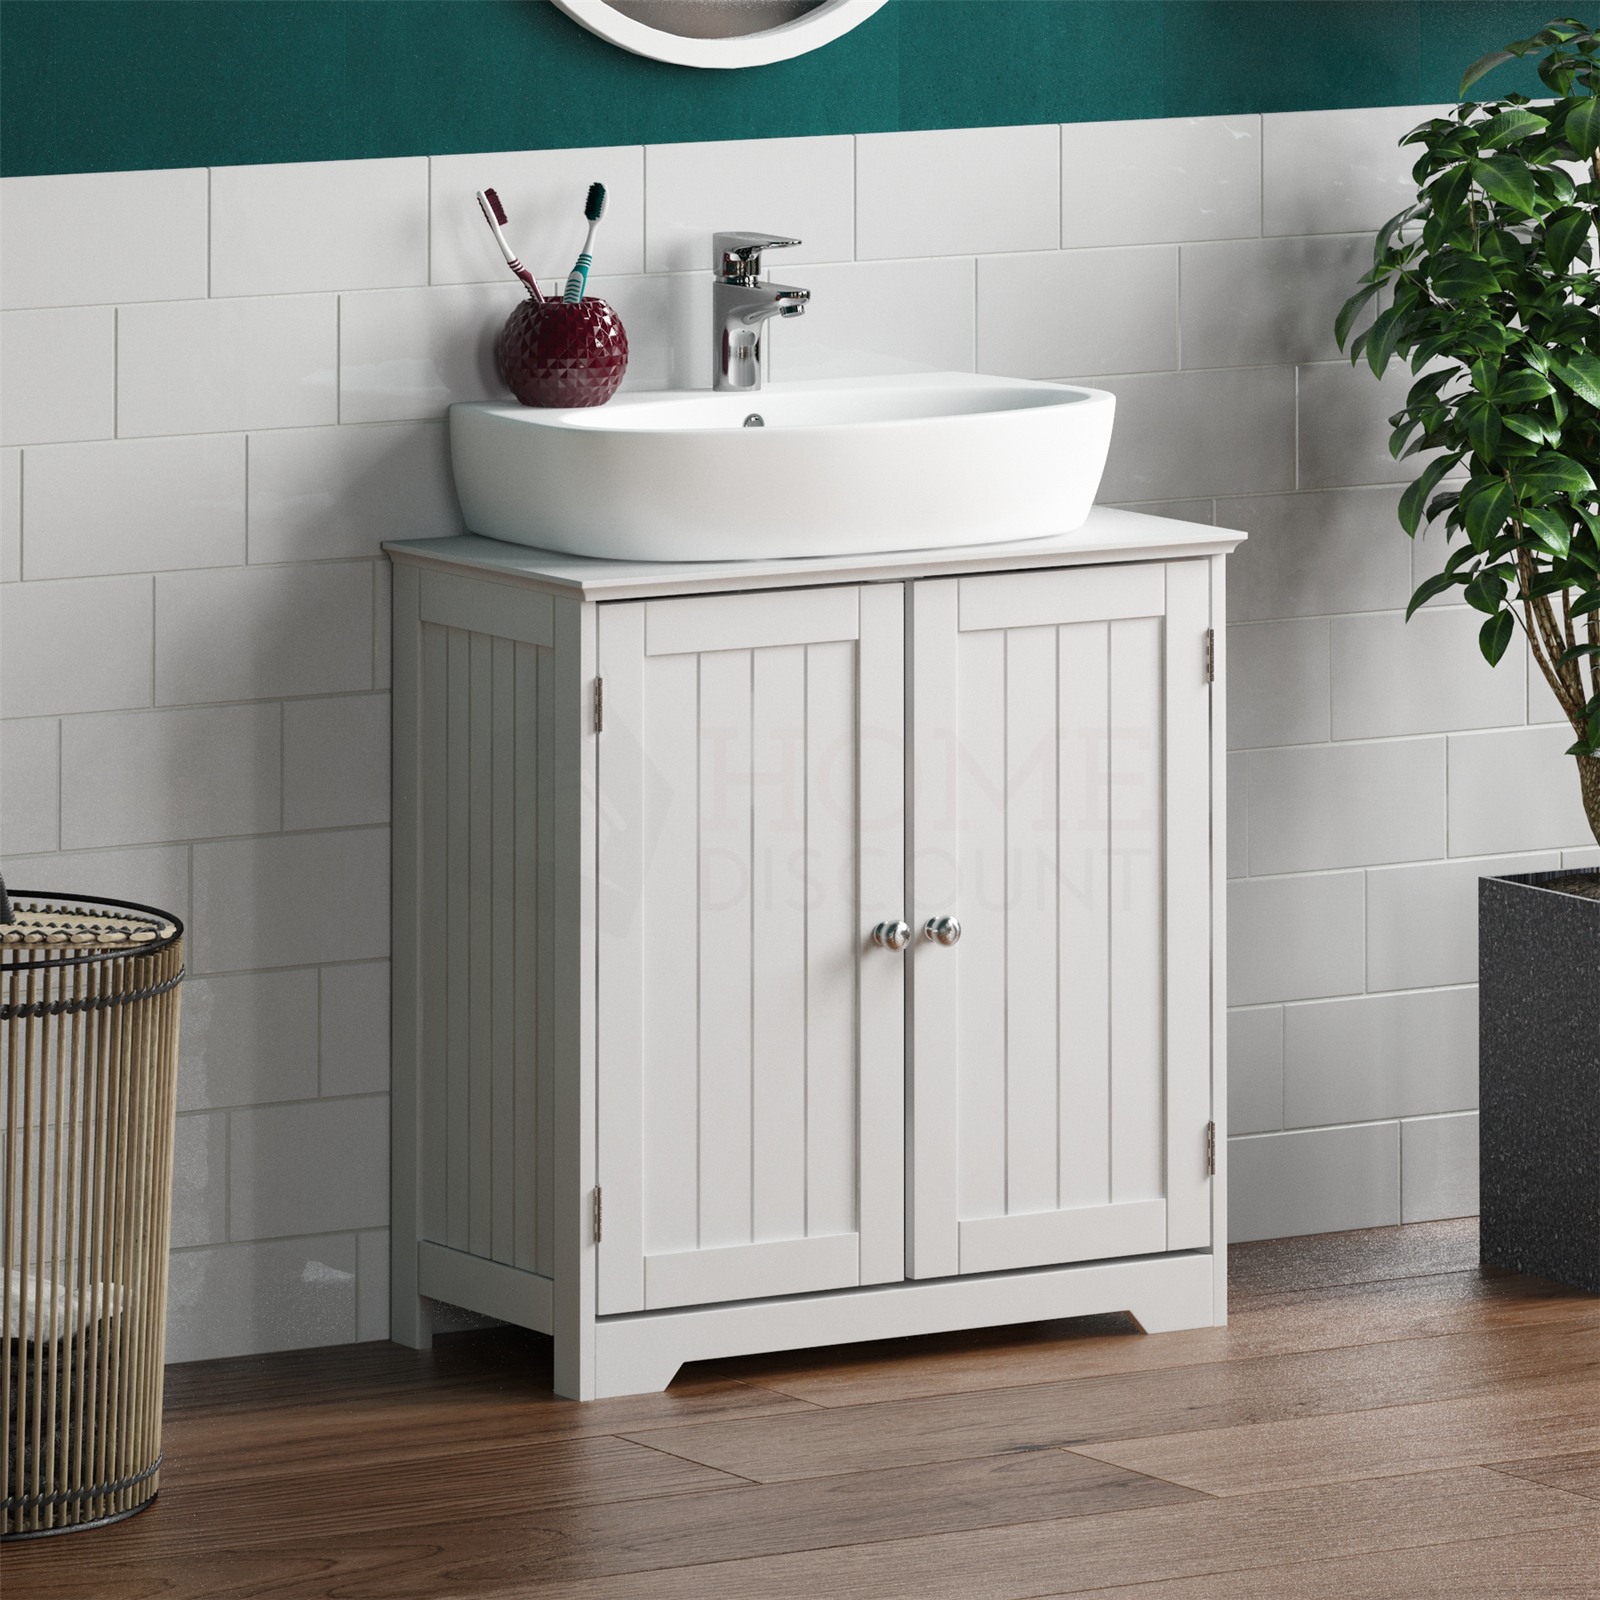 Priano Bathroom Sink Quantity limited Cabinet Under online shopping Storage Cupboard F Unit Basin